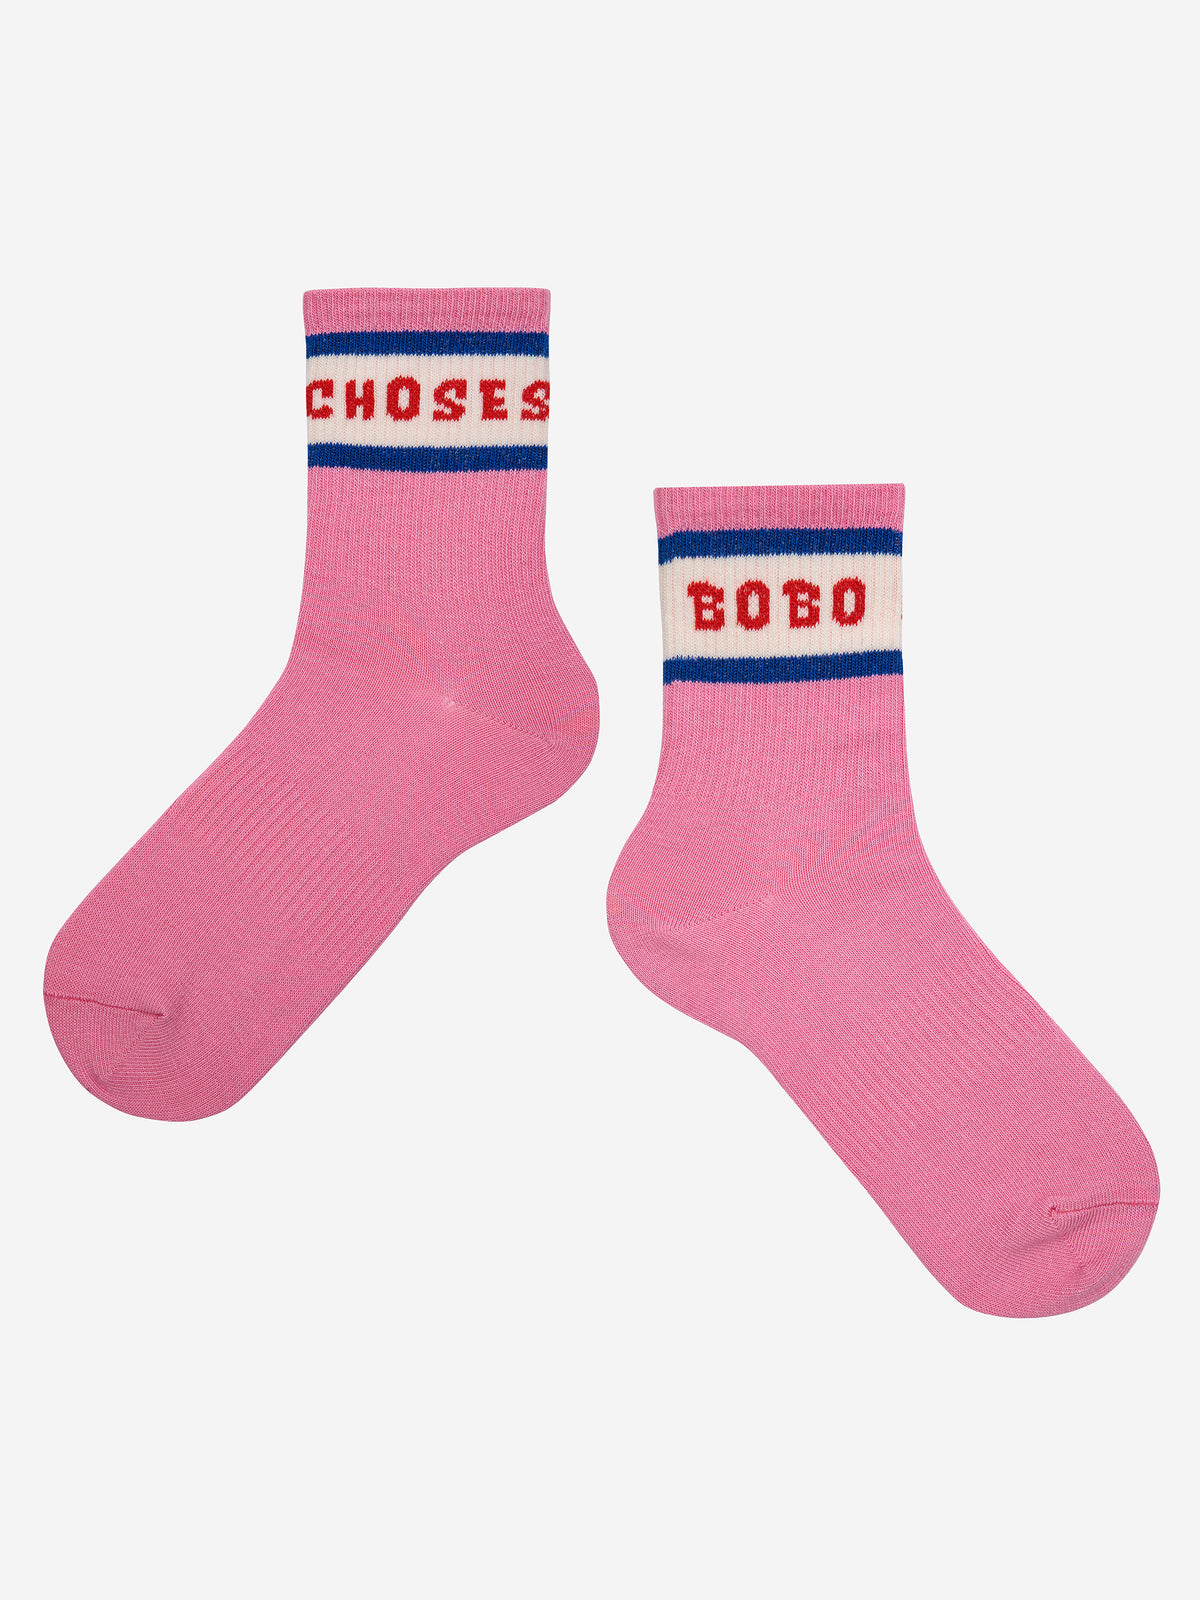 Bobo Choses short socks pink, Bobo Choses